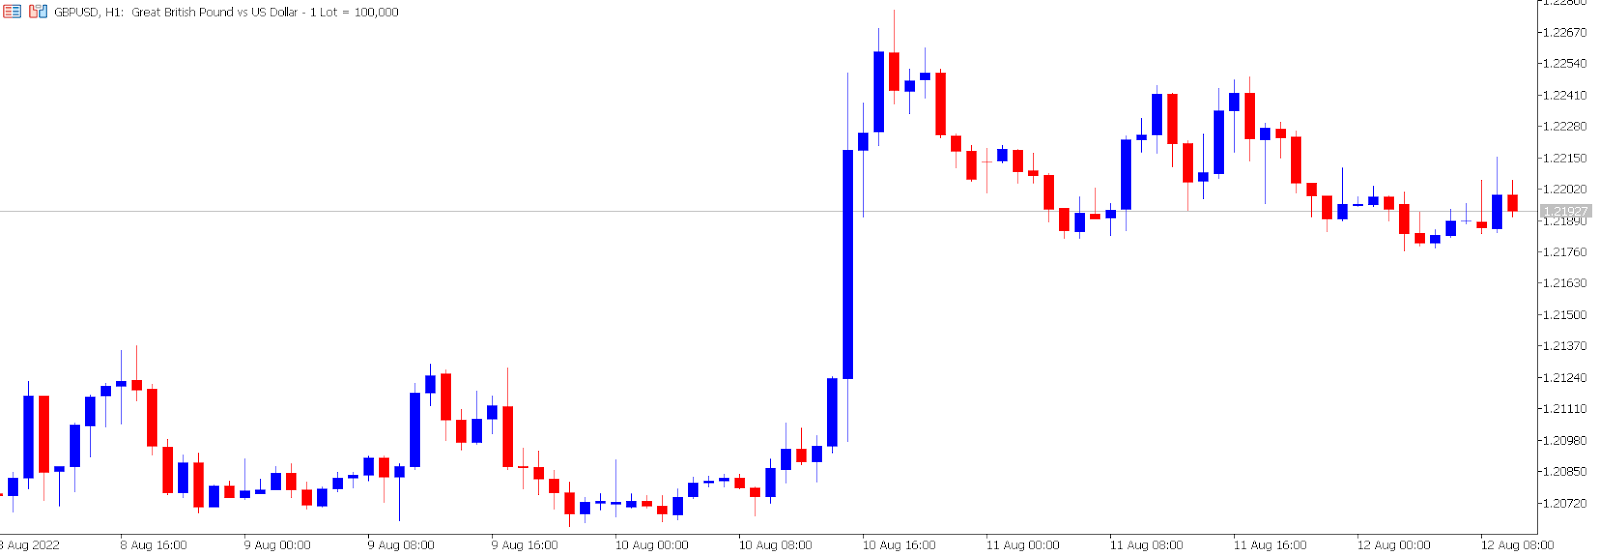 GBP/USD hourly price chart.